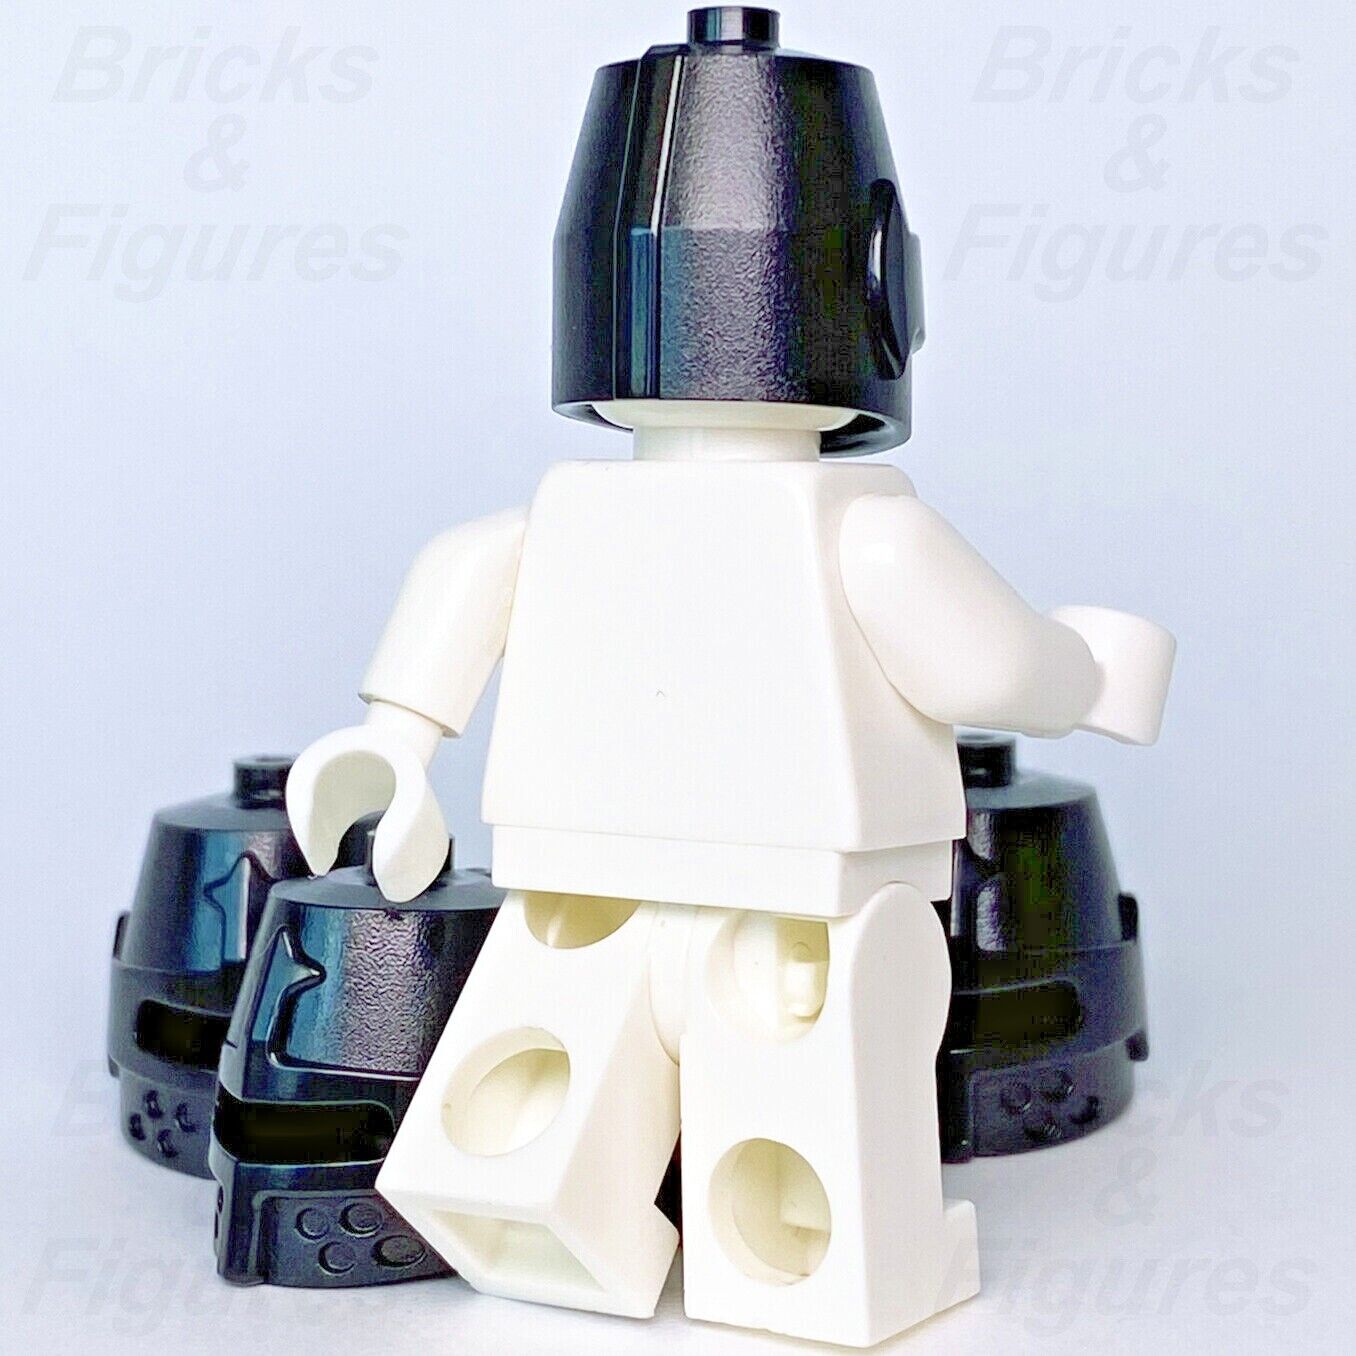 5 x Castle LEGO Knight Closed Helmet w/ Eye Slit Minifigure Headgear Part 89520 - Bricks & Figures